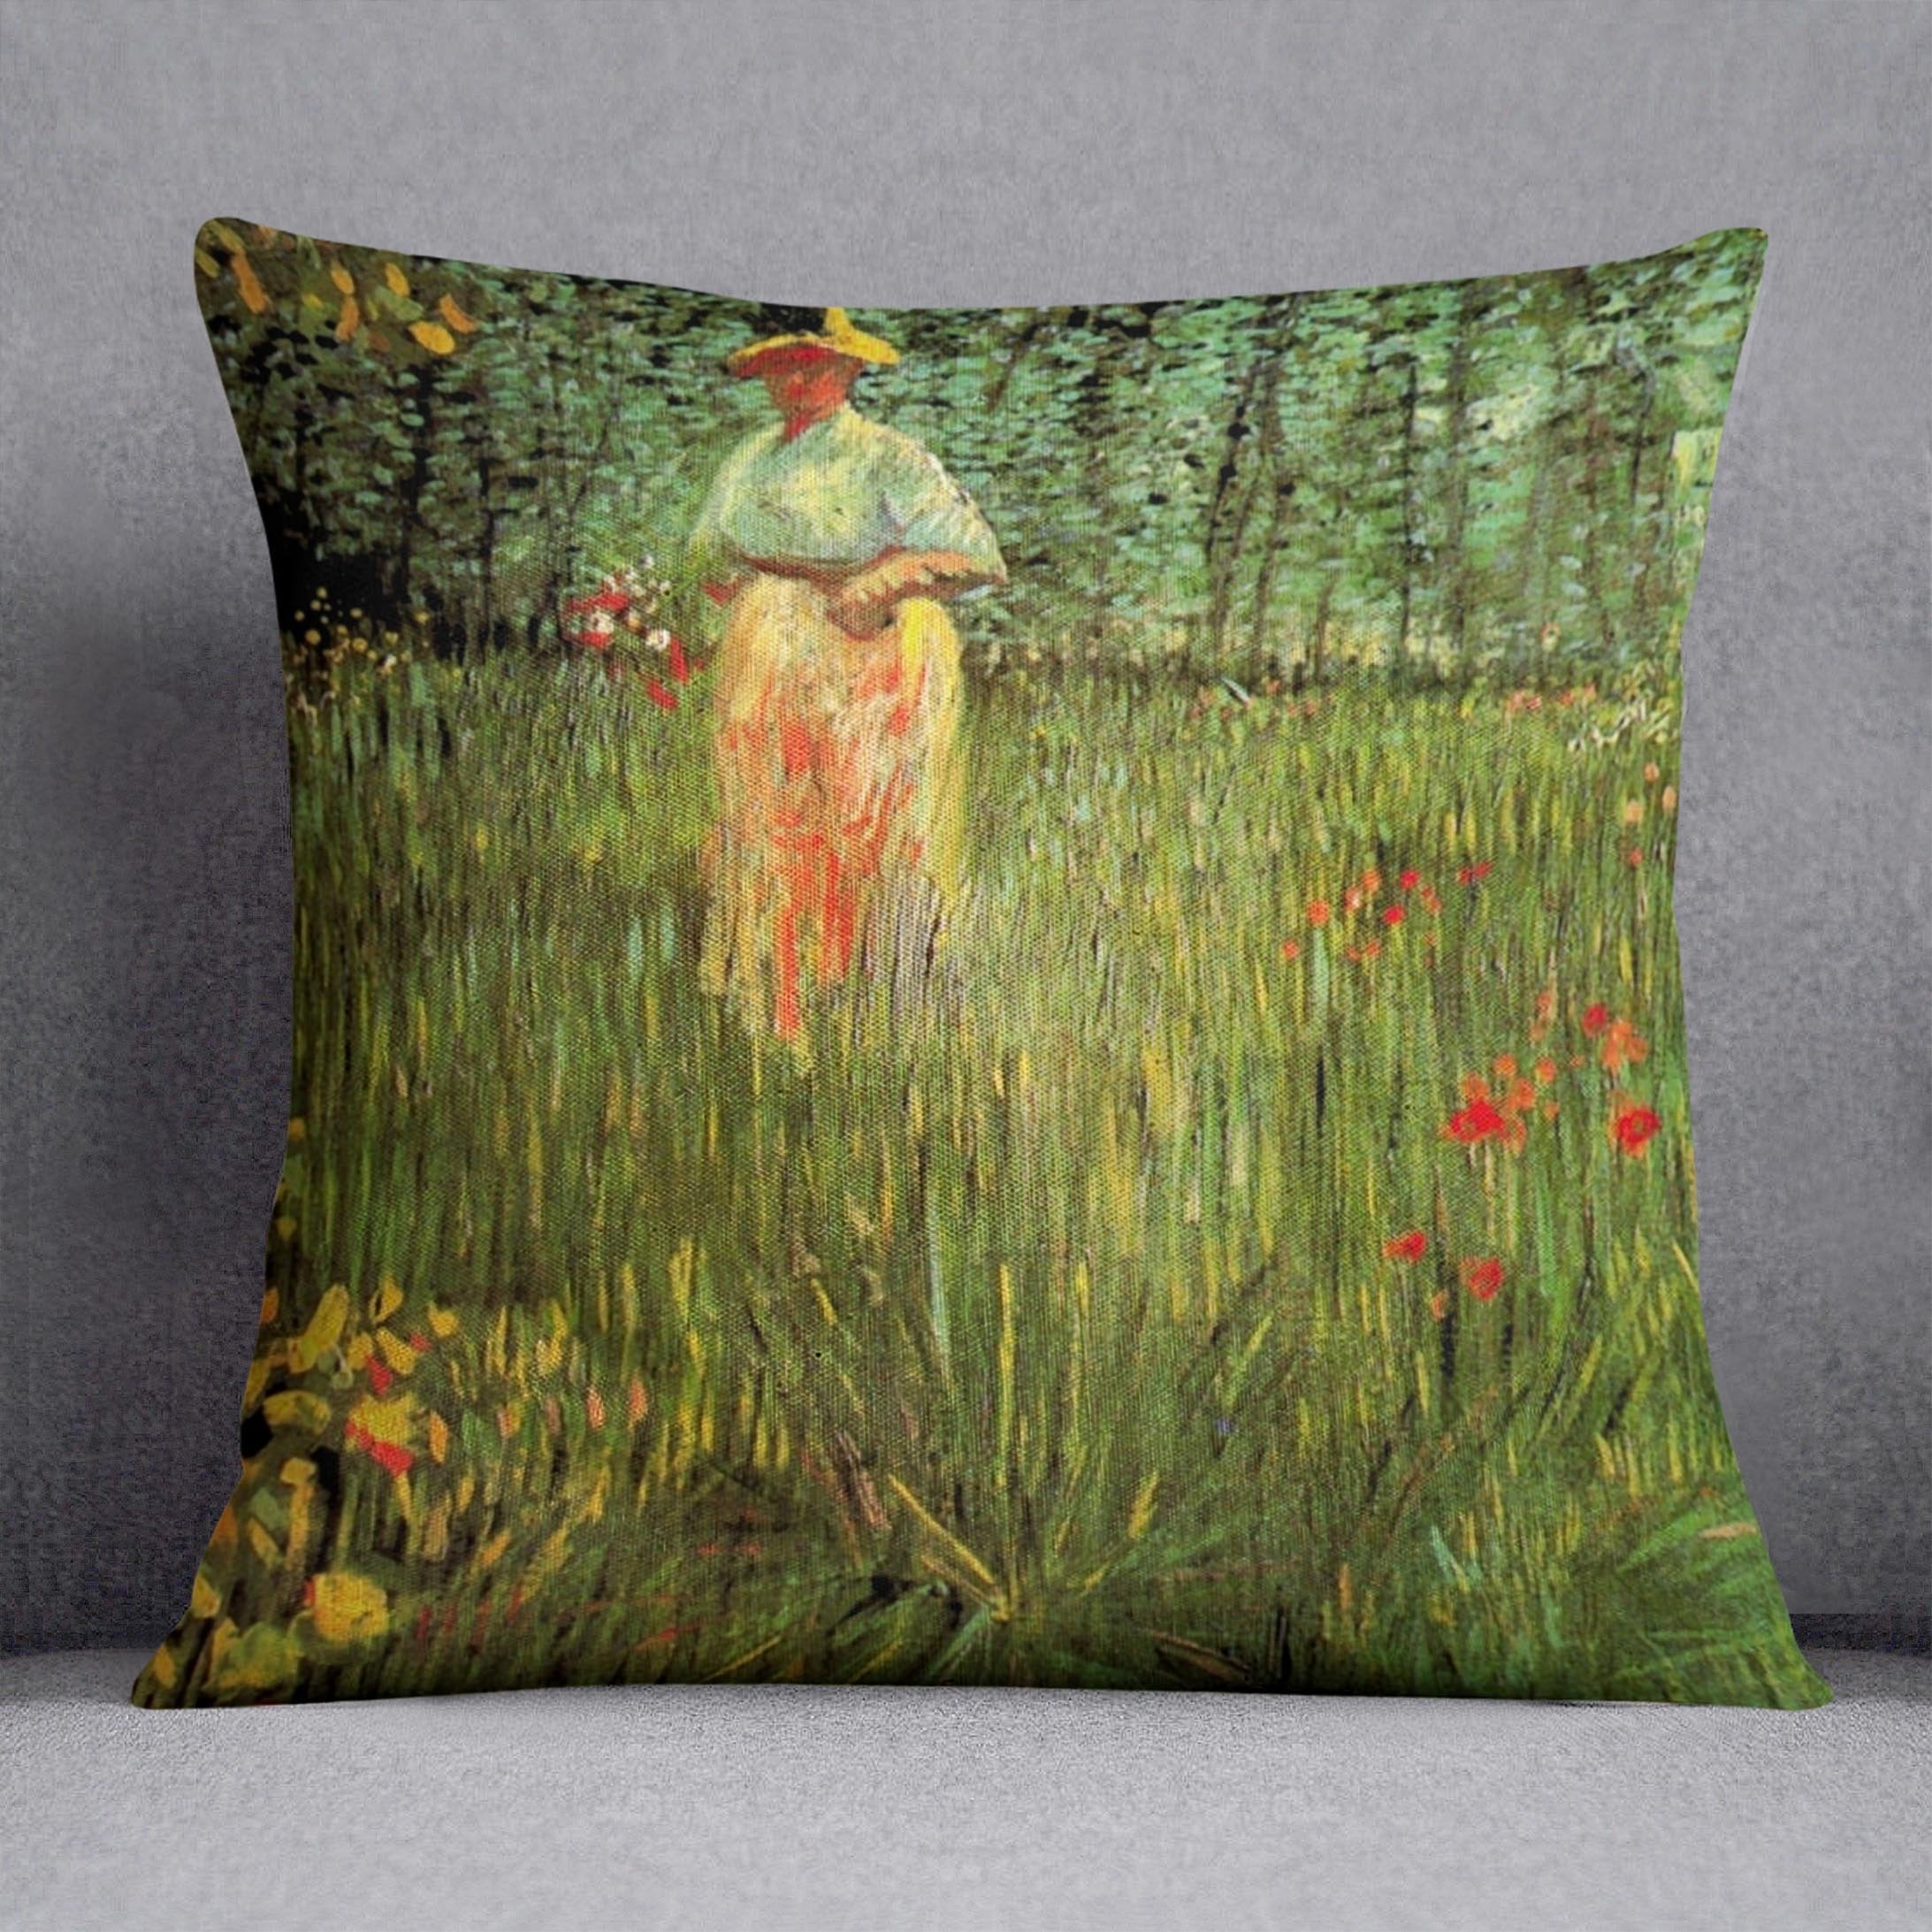 A Woman Walking in a Garden by Van Gogh Throw Pillow